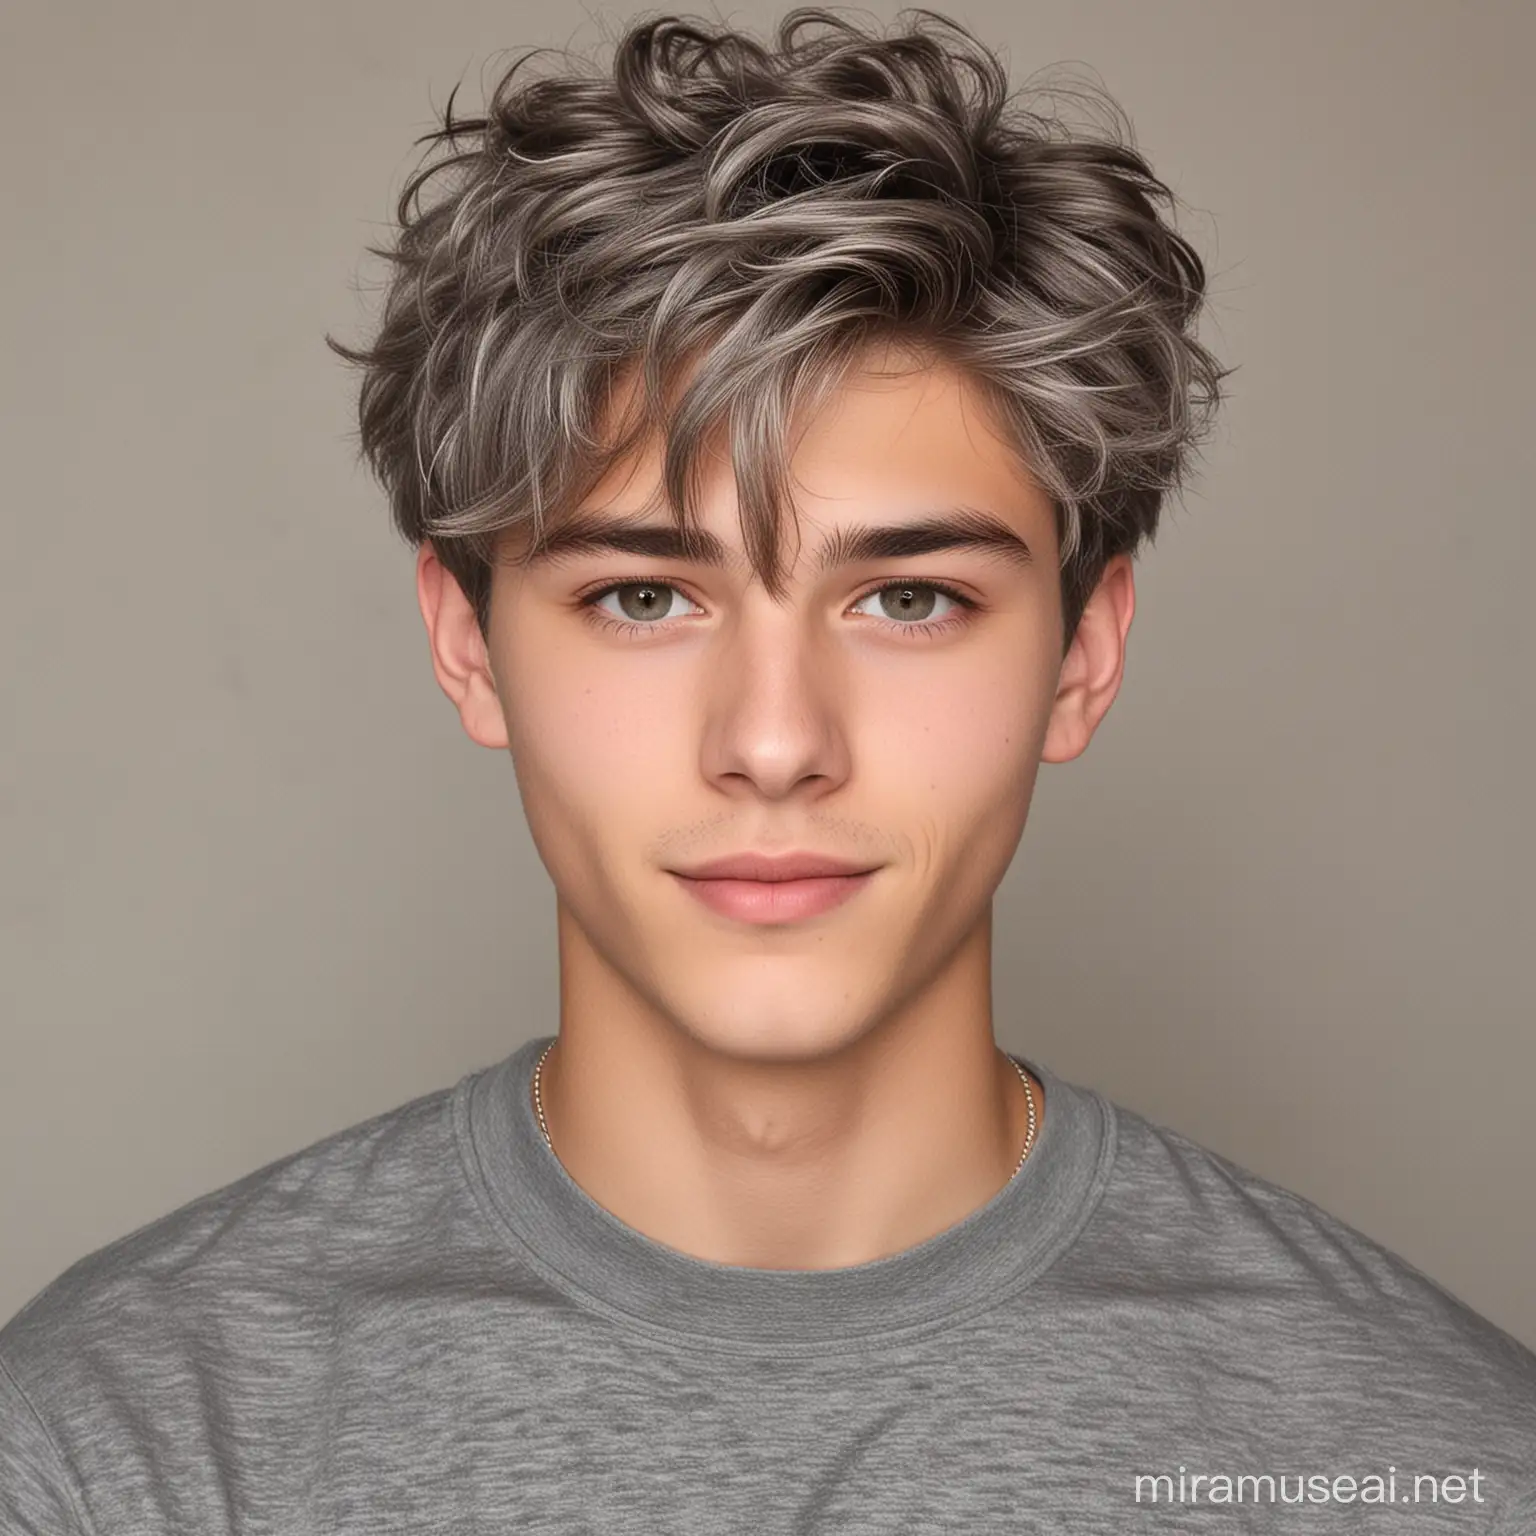 Stylish 18YearOld Boy with Ash Gray Wavy Hair